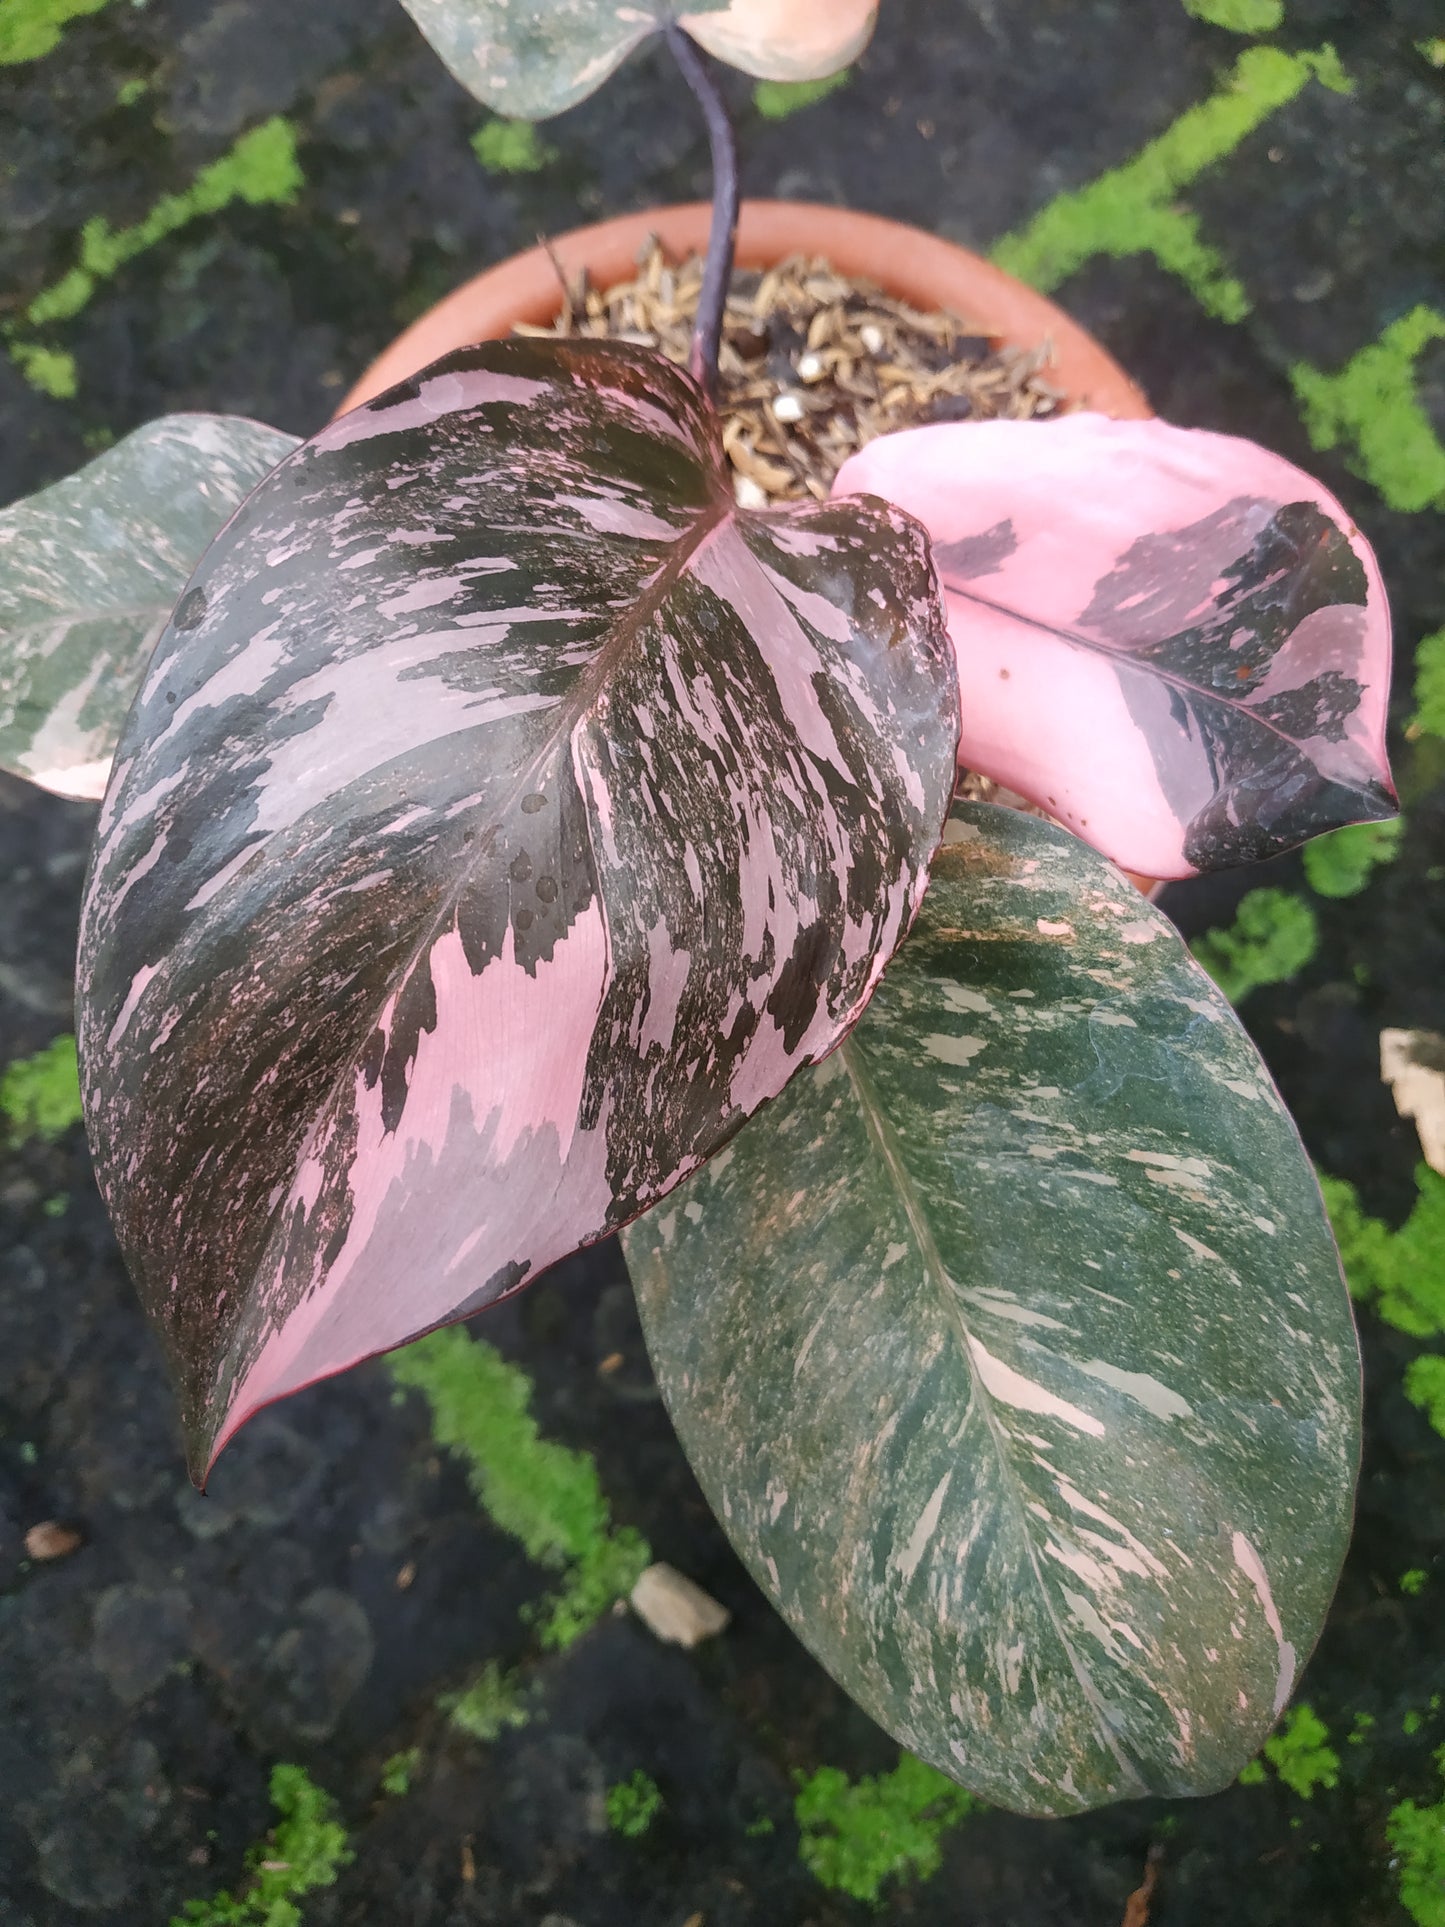 Philodendron Pink Princess Galaxy Variegated